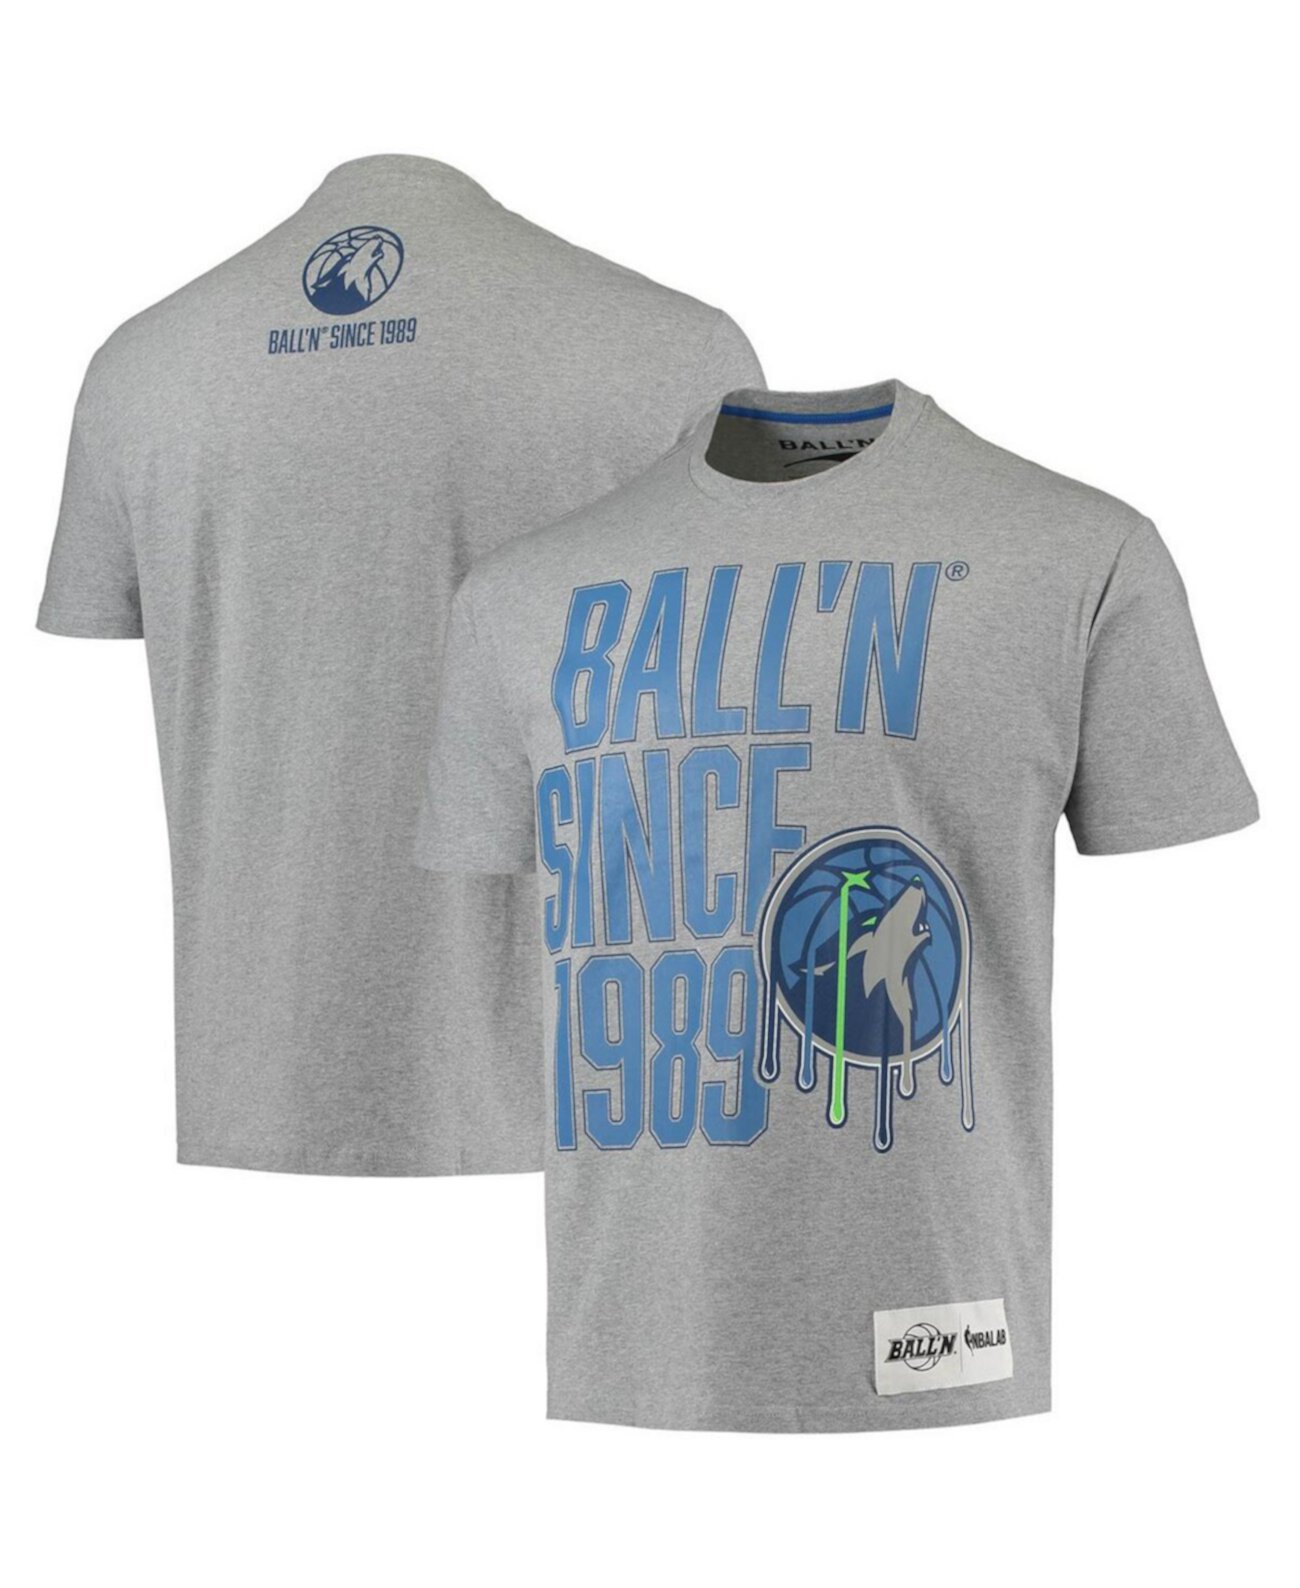 Мужская серая футболка Minnesota Timberwolves с 1989 г. в меланжевом цвете BALL'N